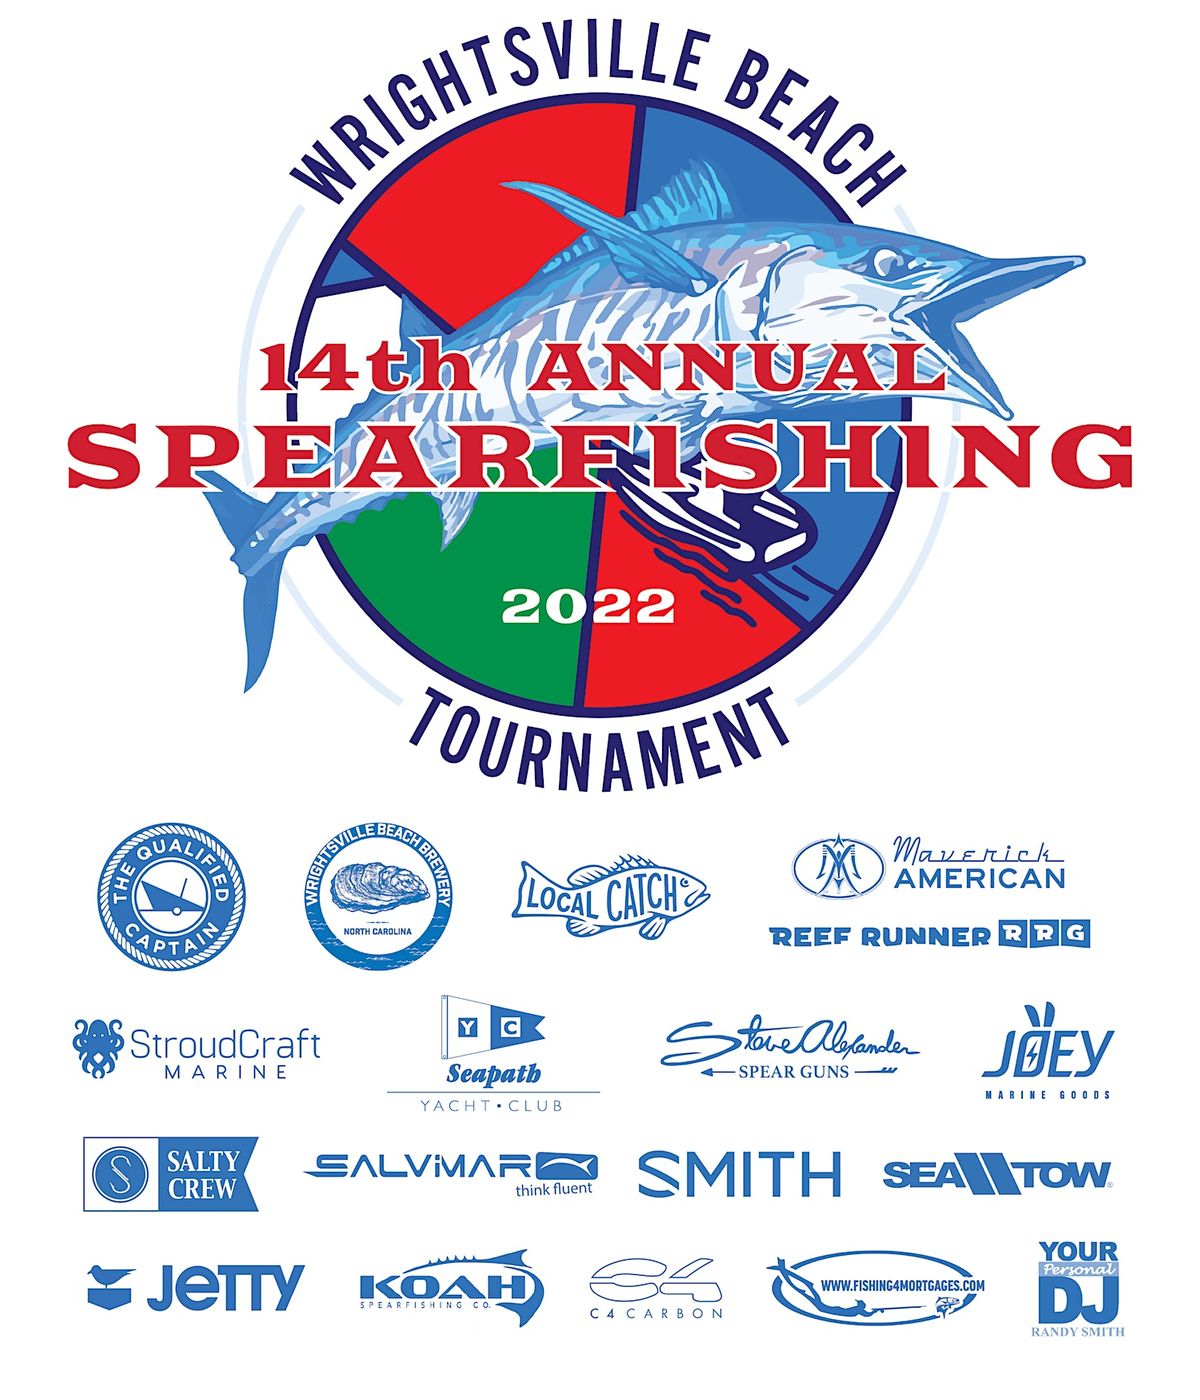 14th Annual Wrightsville Beach Spearfishing Tournament Seapath Yacht